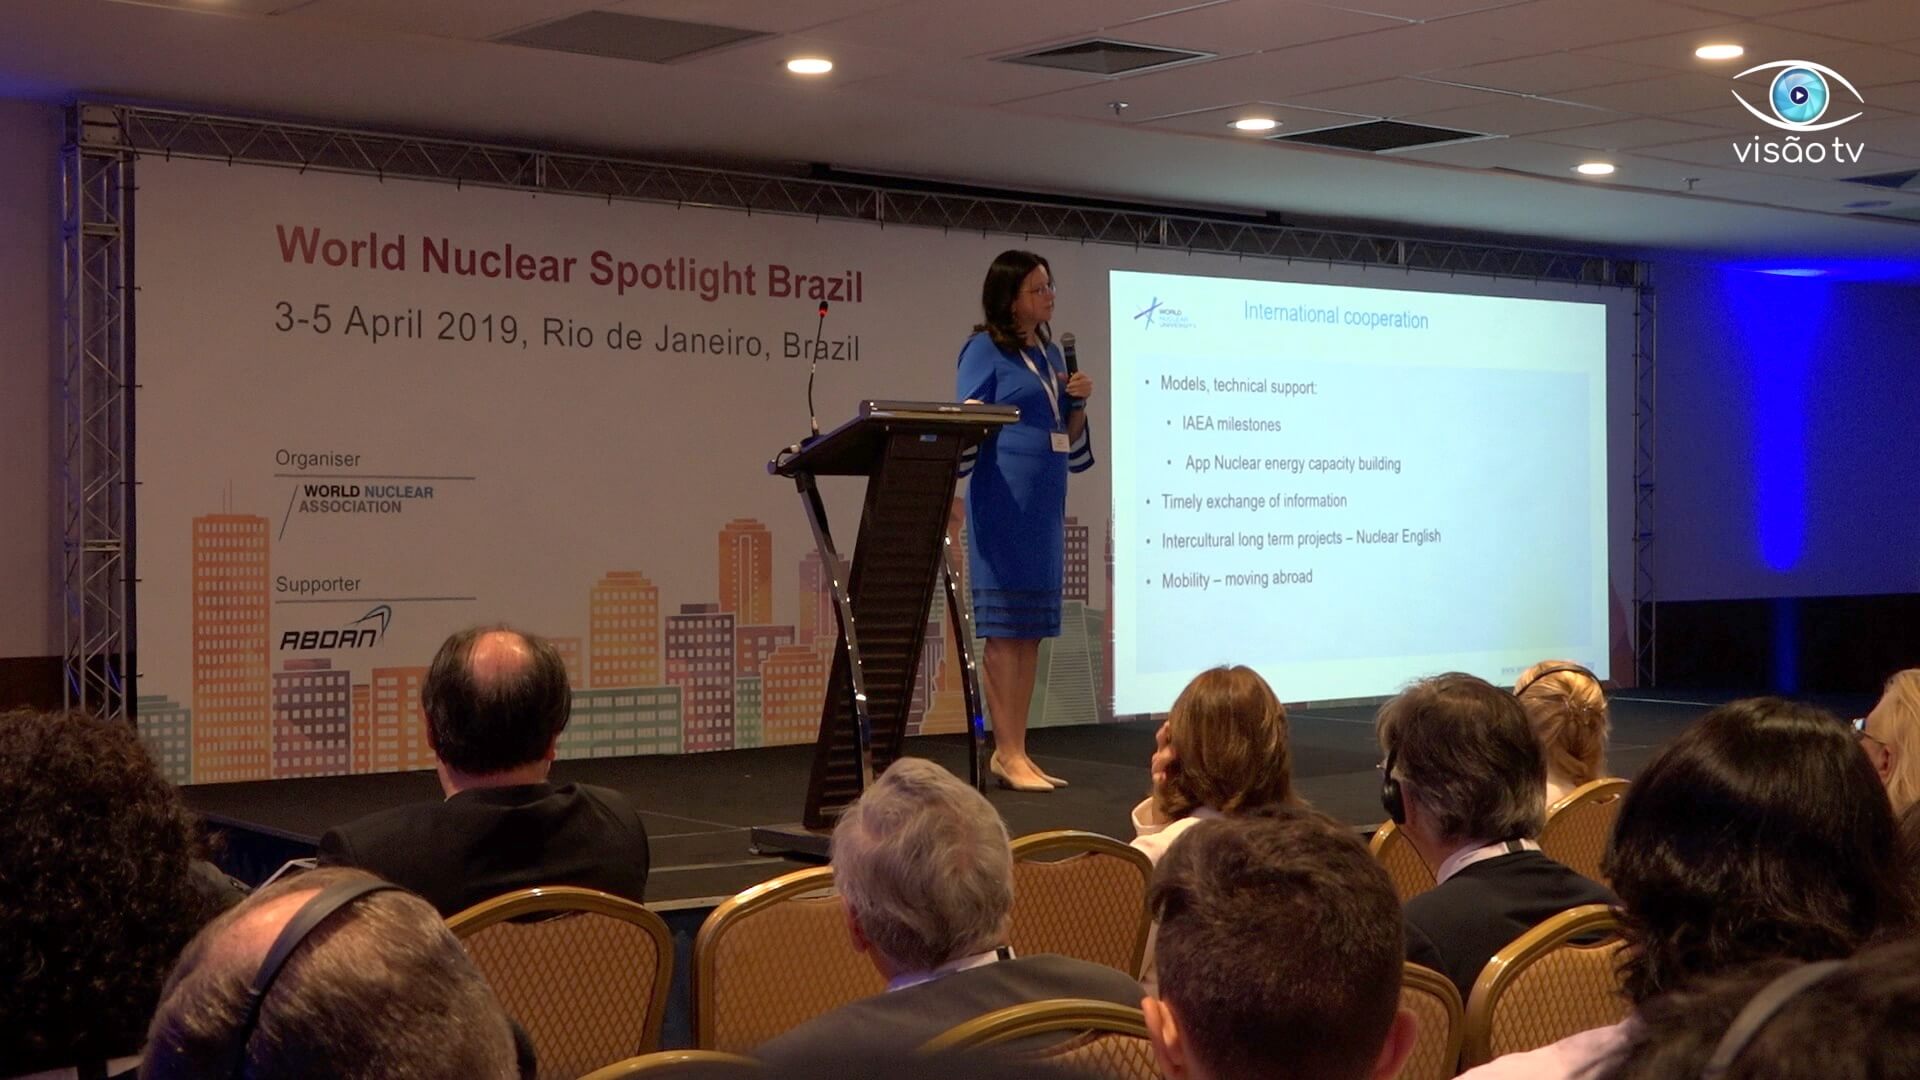 Congresso sobre energia nuclear no Rio de Janeiro – World Nuclear Spotlight